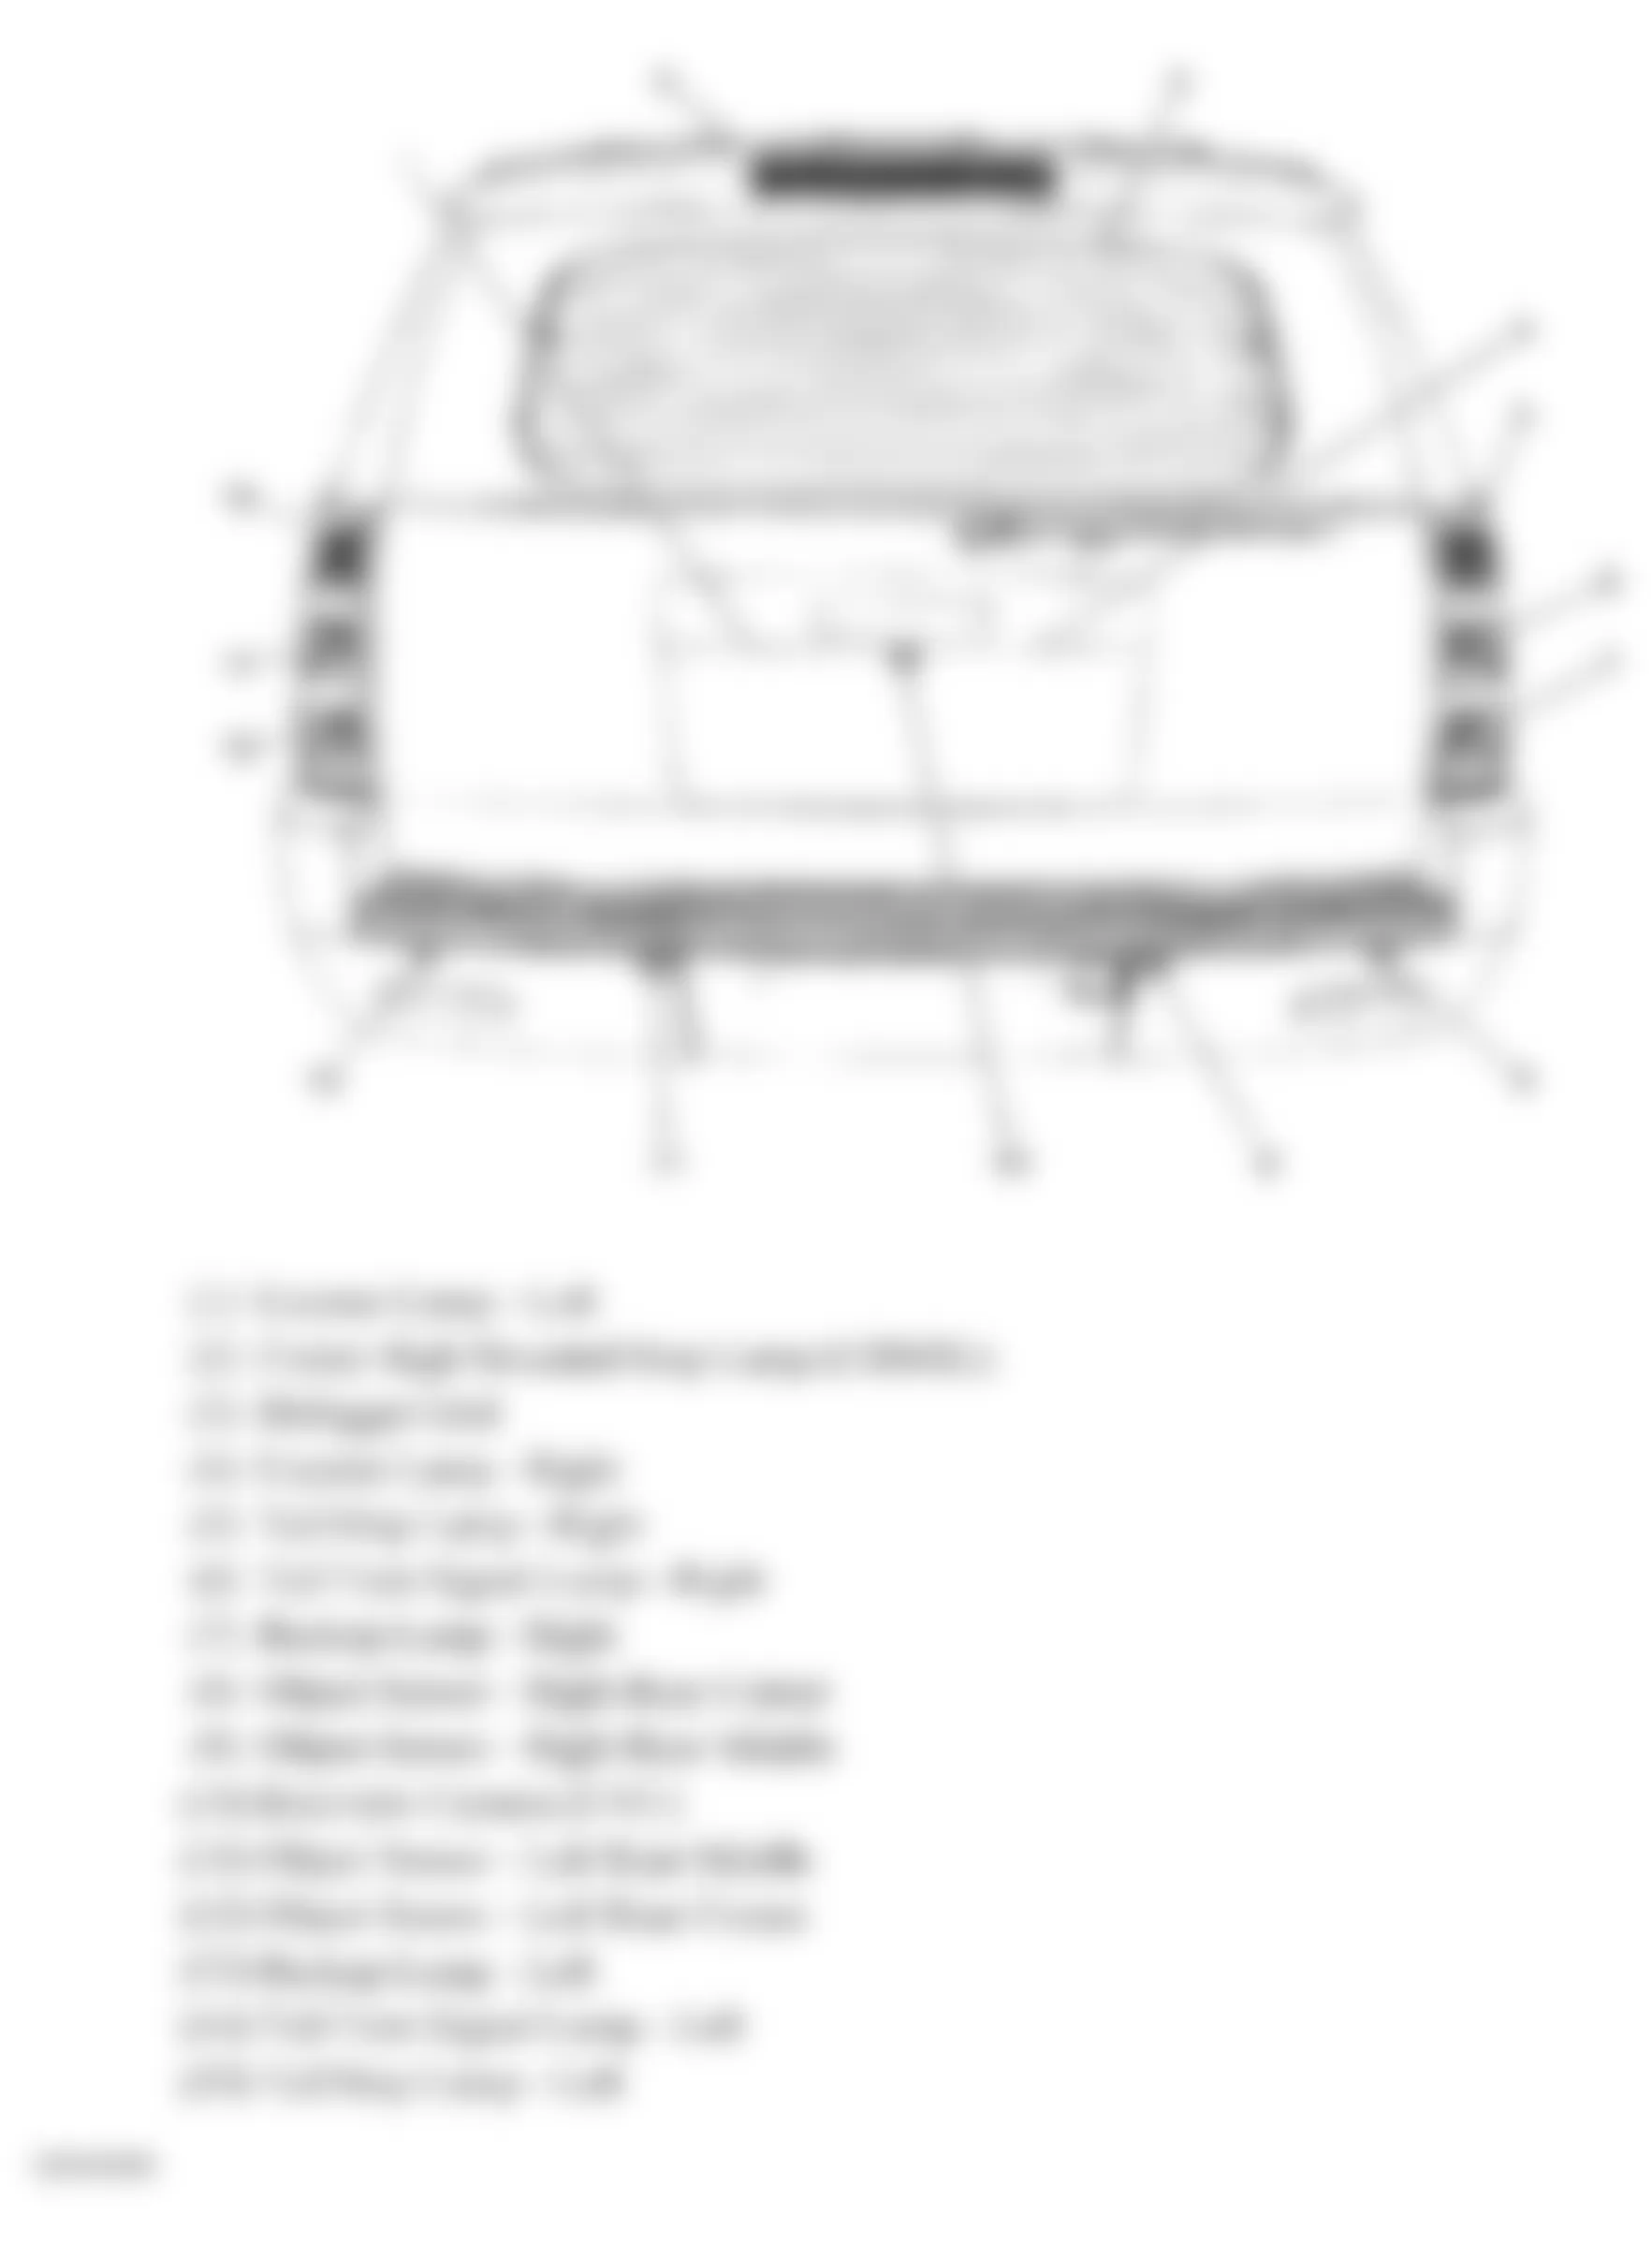 GMC Yukon 2009 - Component Locations -  Rear Of Vehicle (Yukon W/One Piece Liftgate)